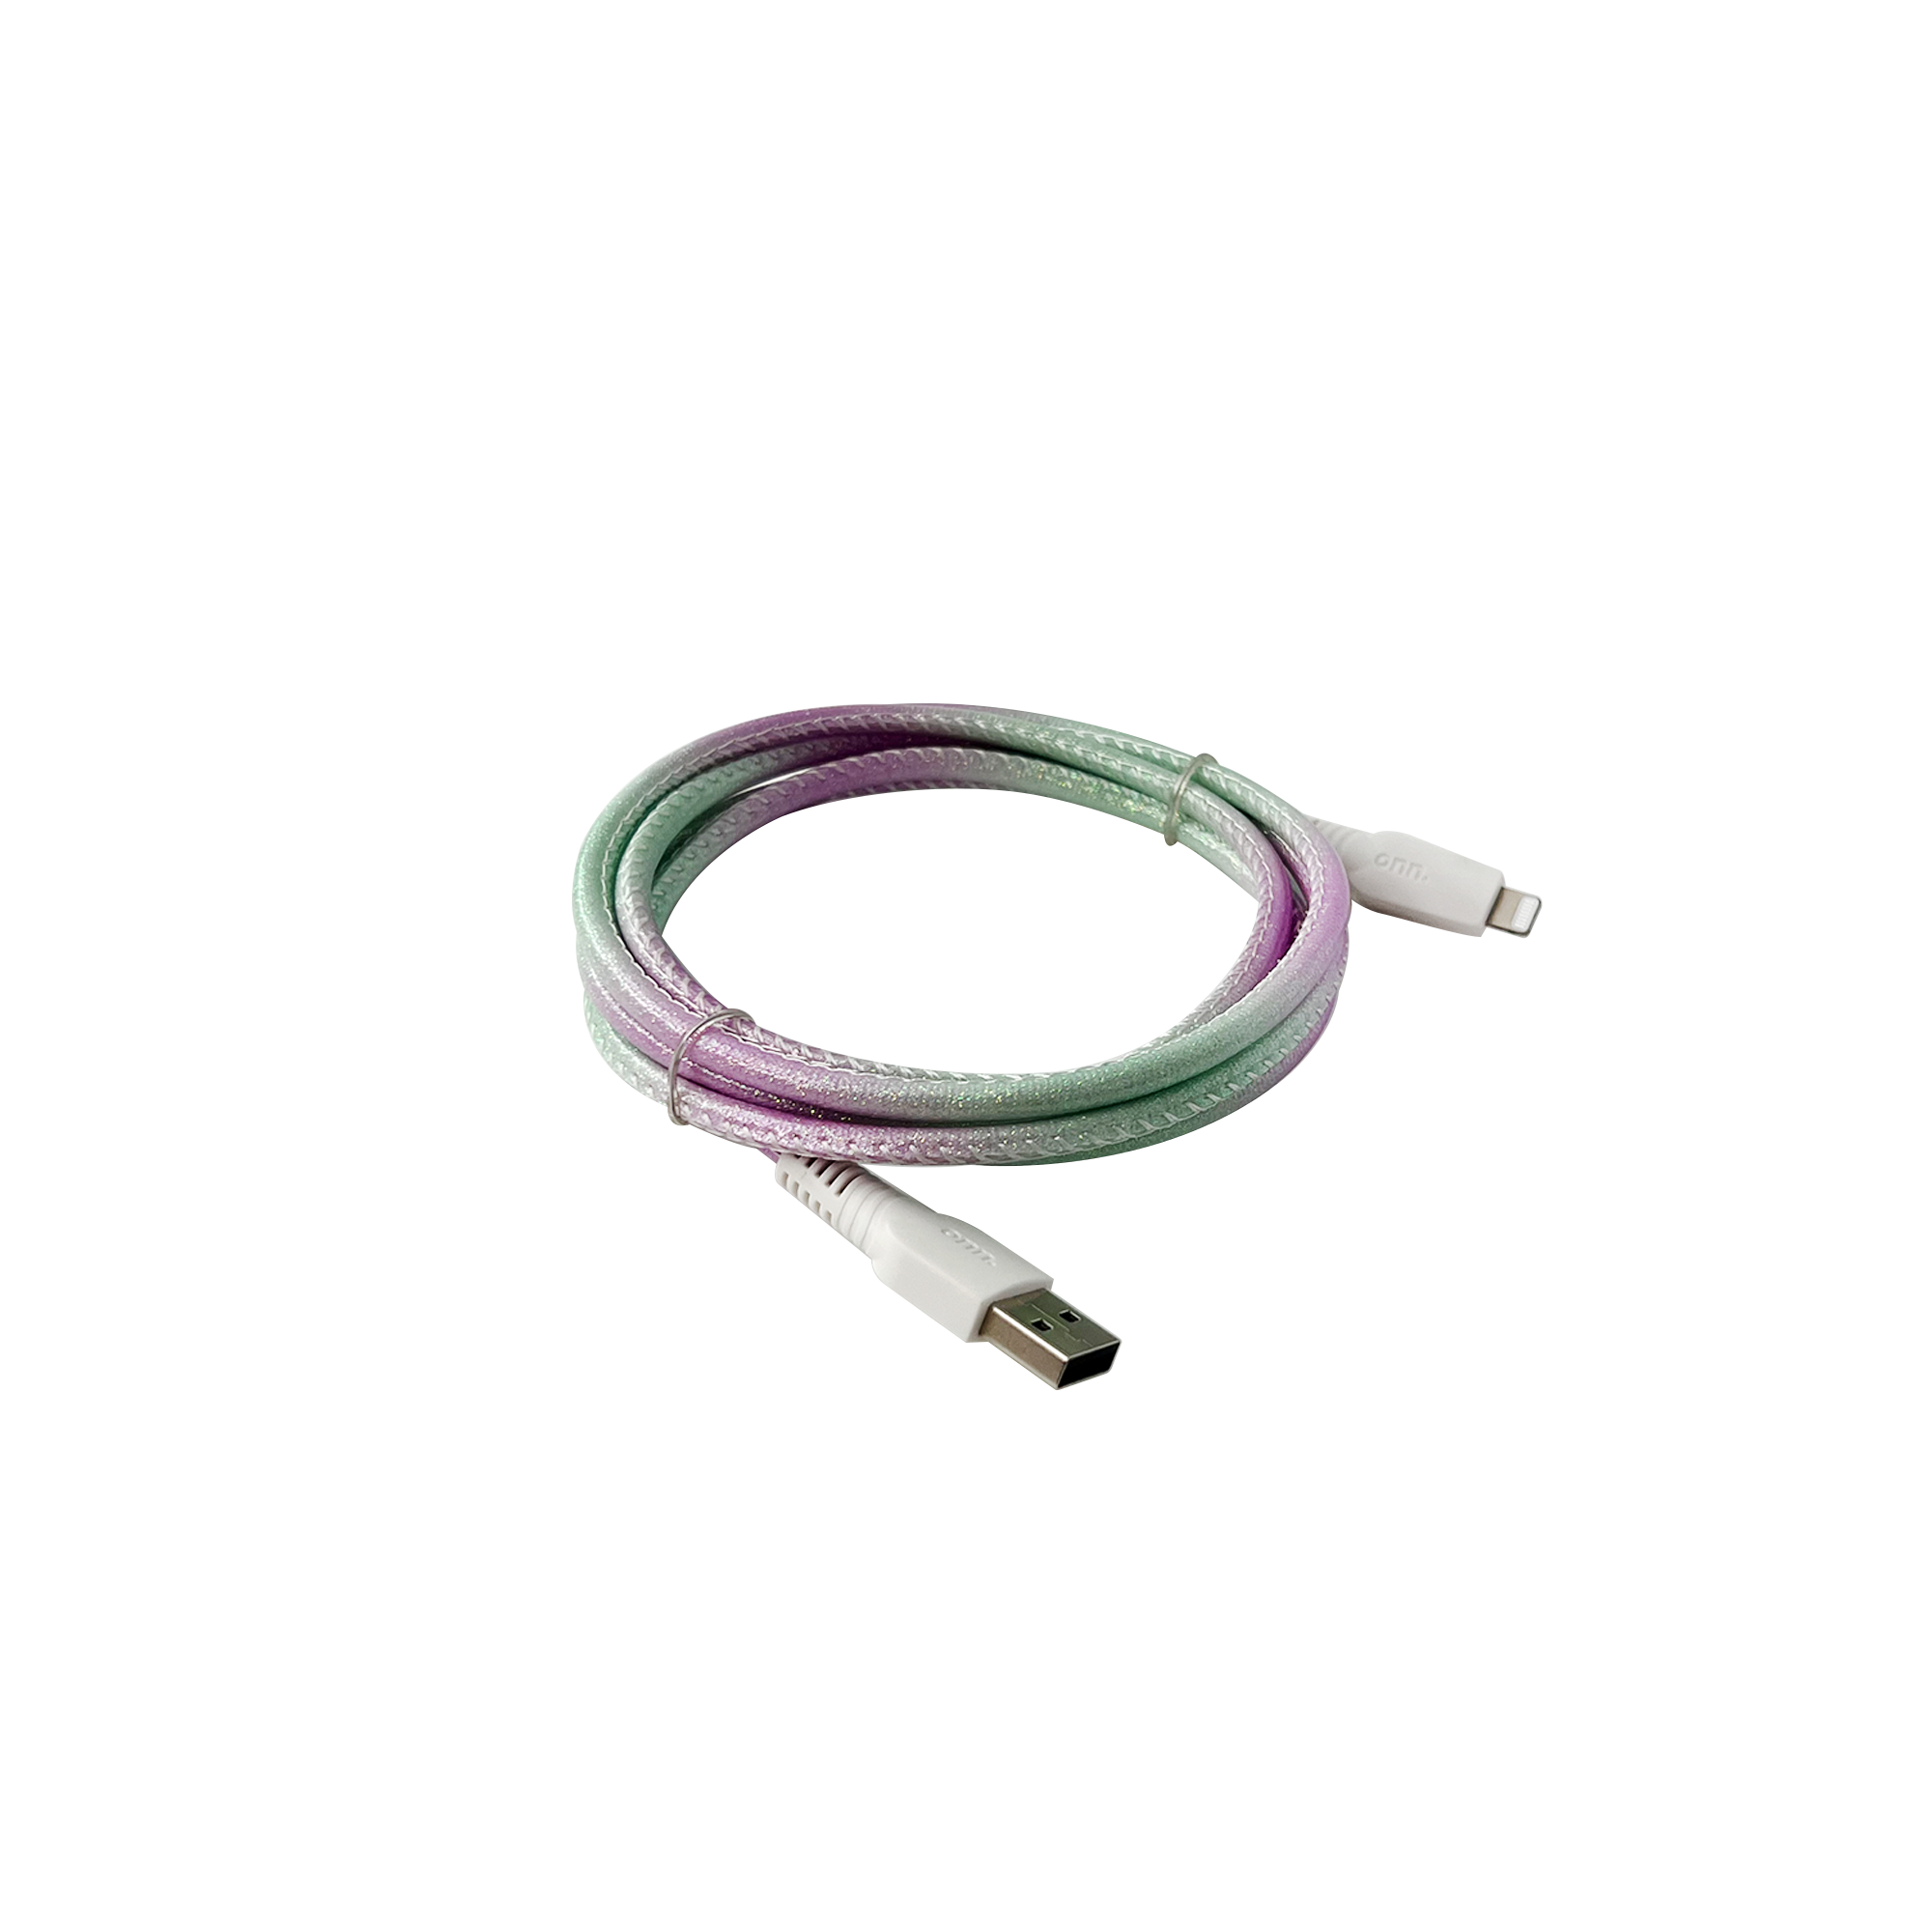 onn. Lightning to USB Glitter Cable, 6' Cord, Purple & Mint 